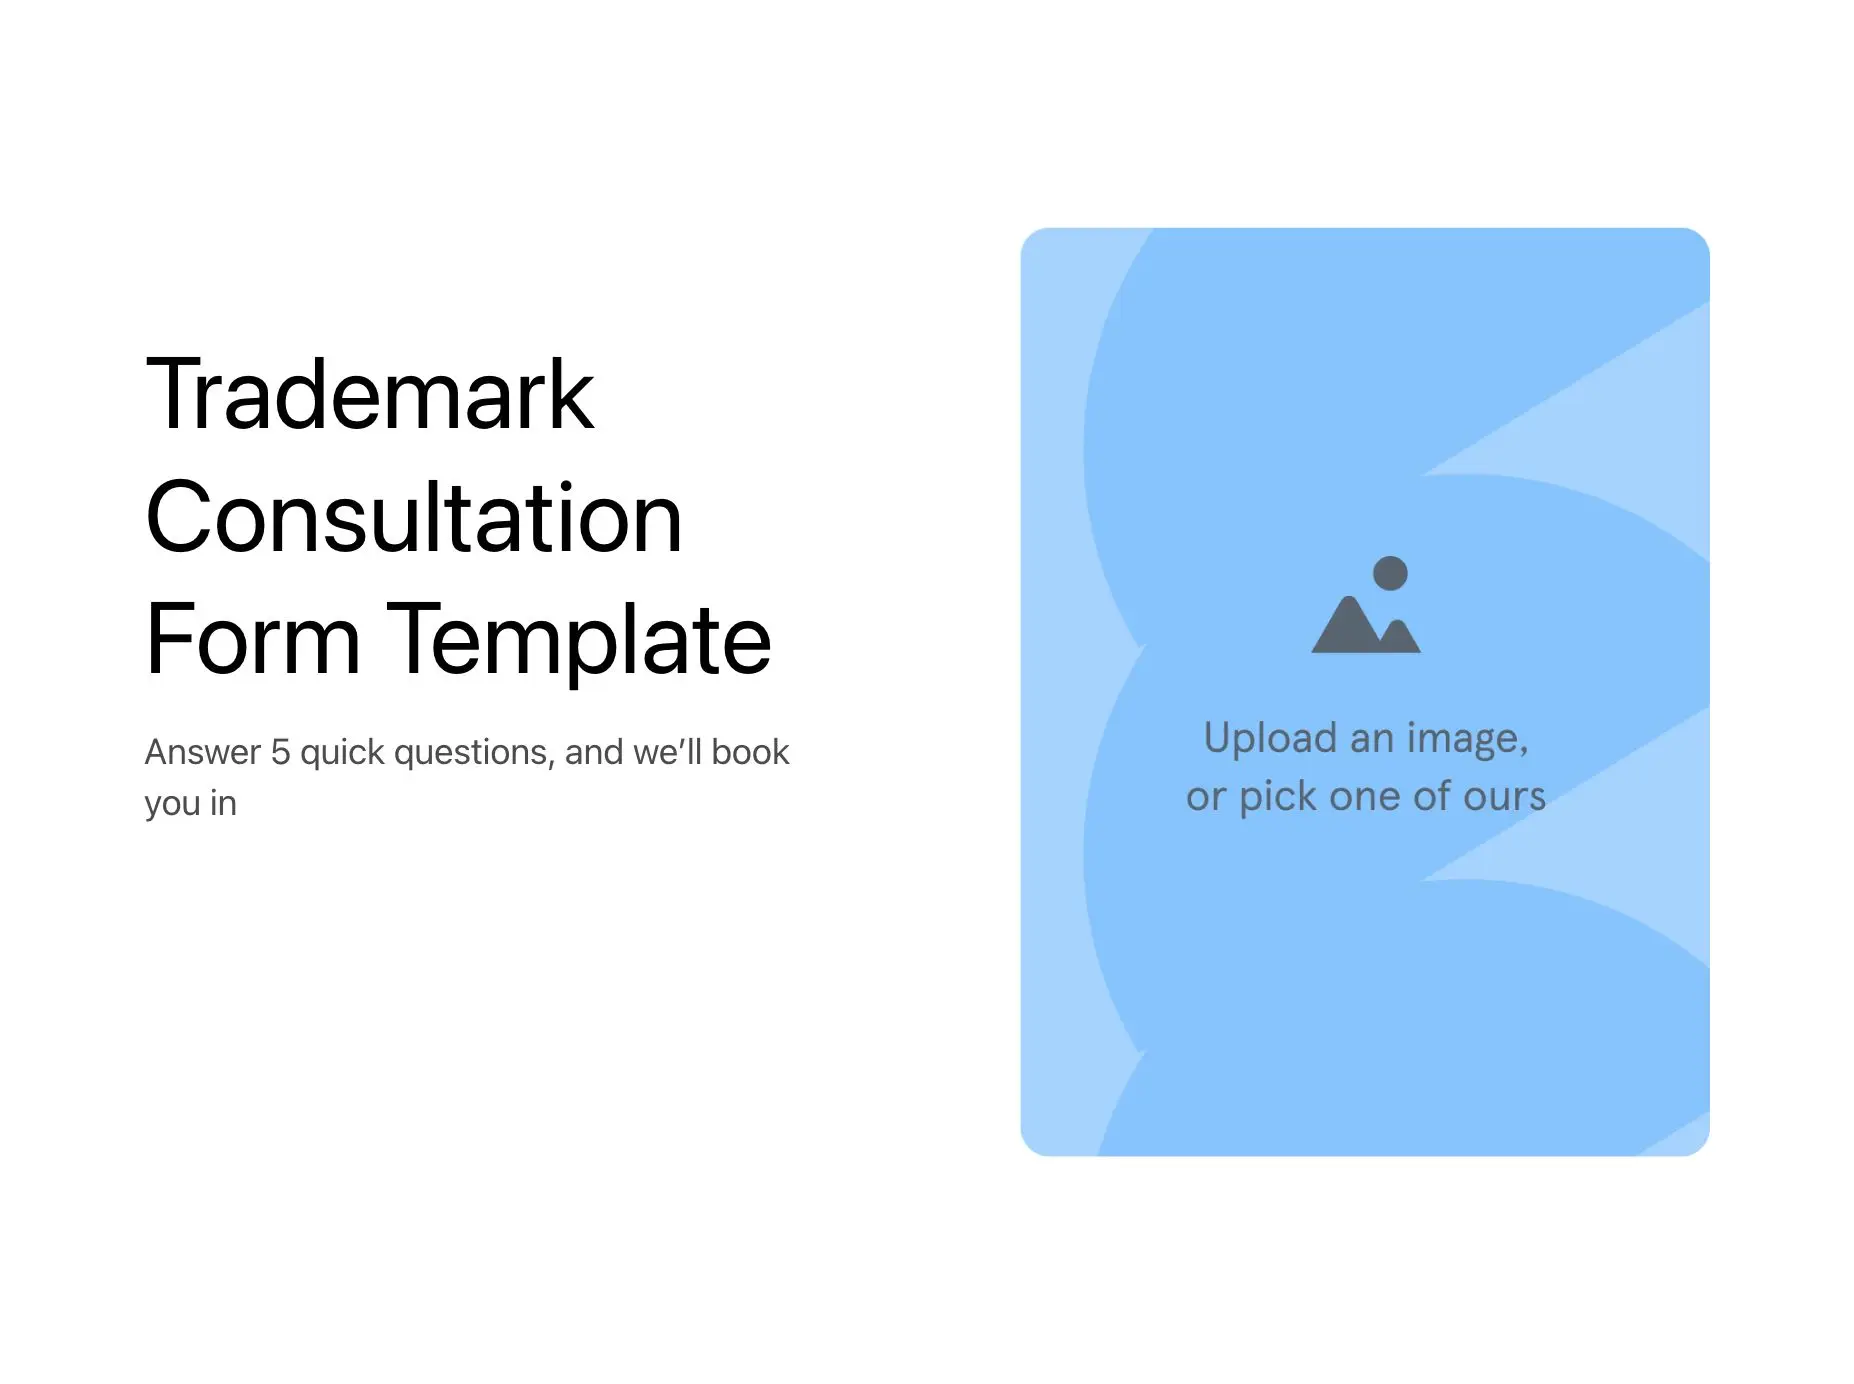 Trademark Consultation Form Template Hero